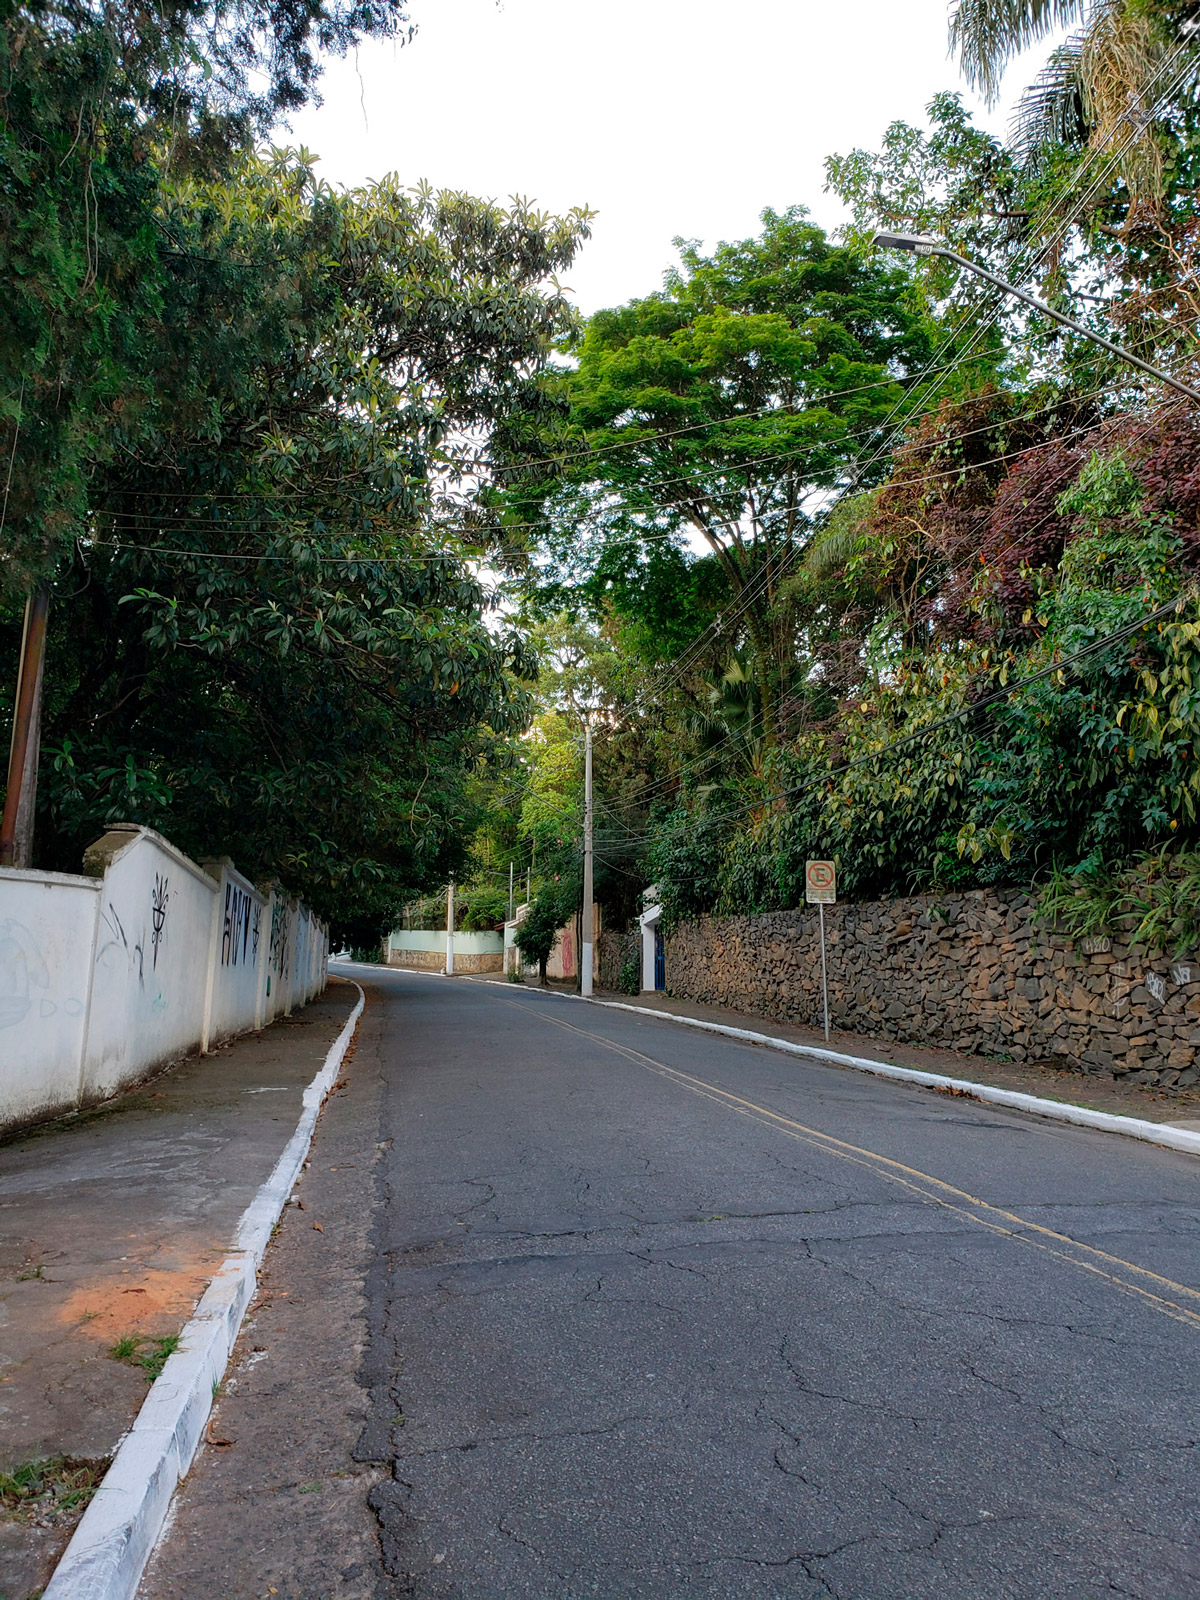 Serra da Cantareira